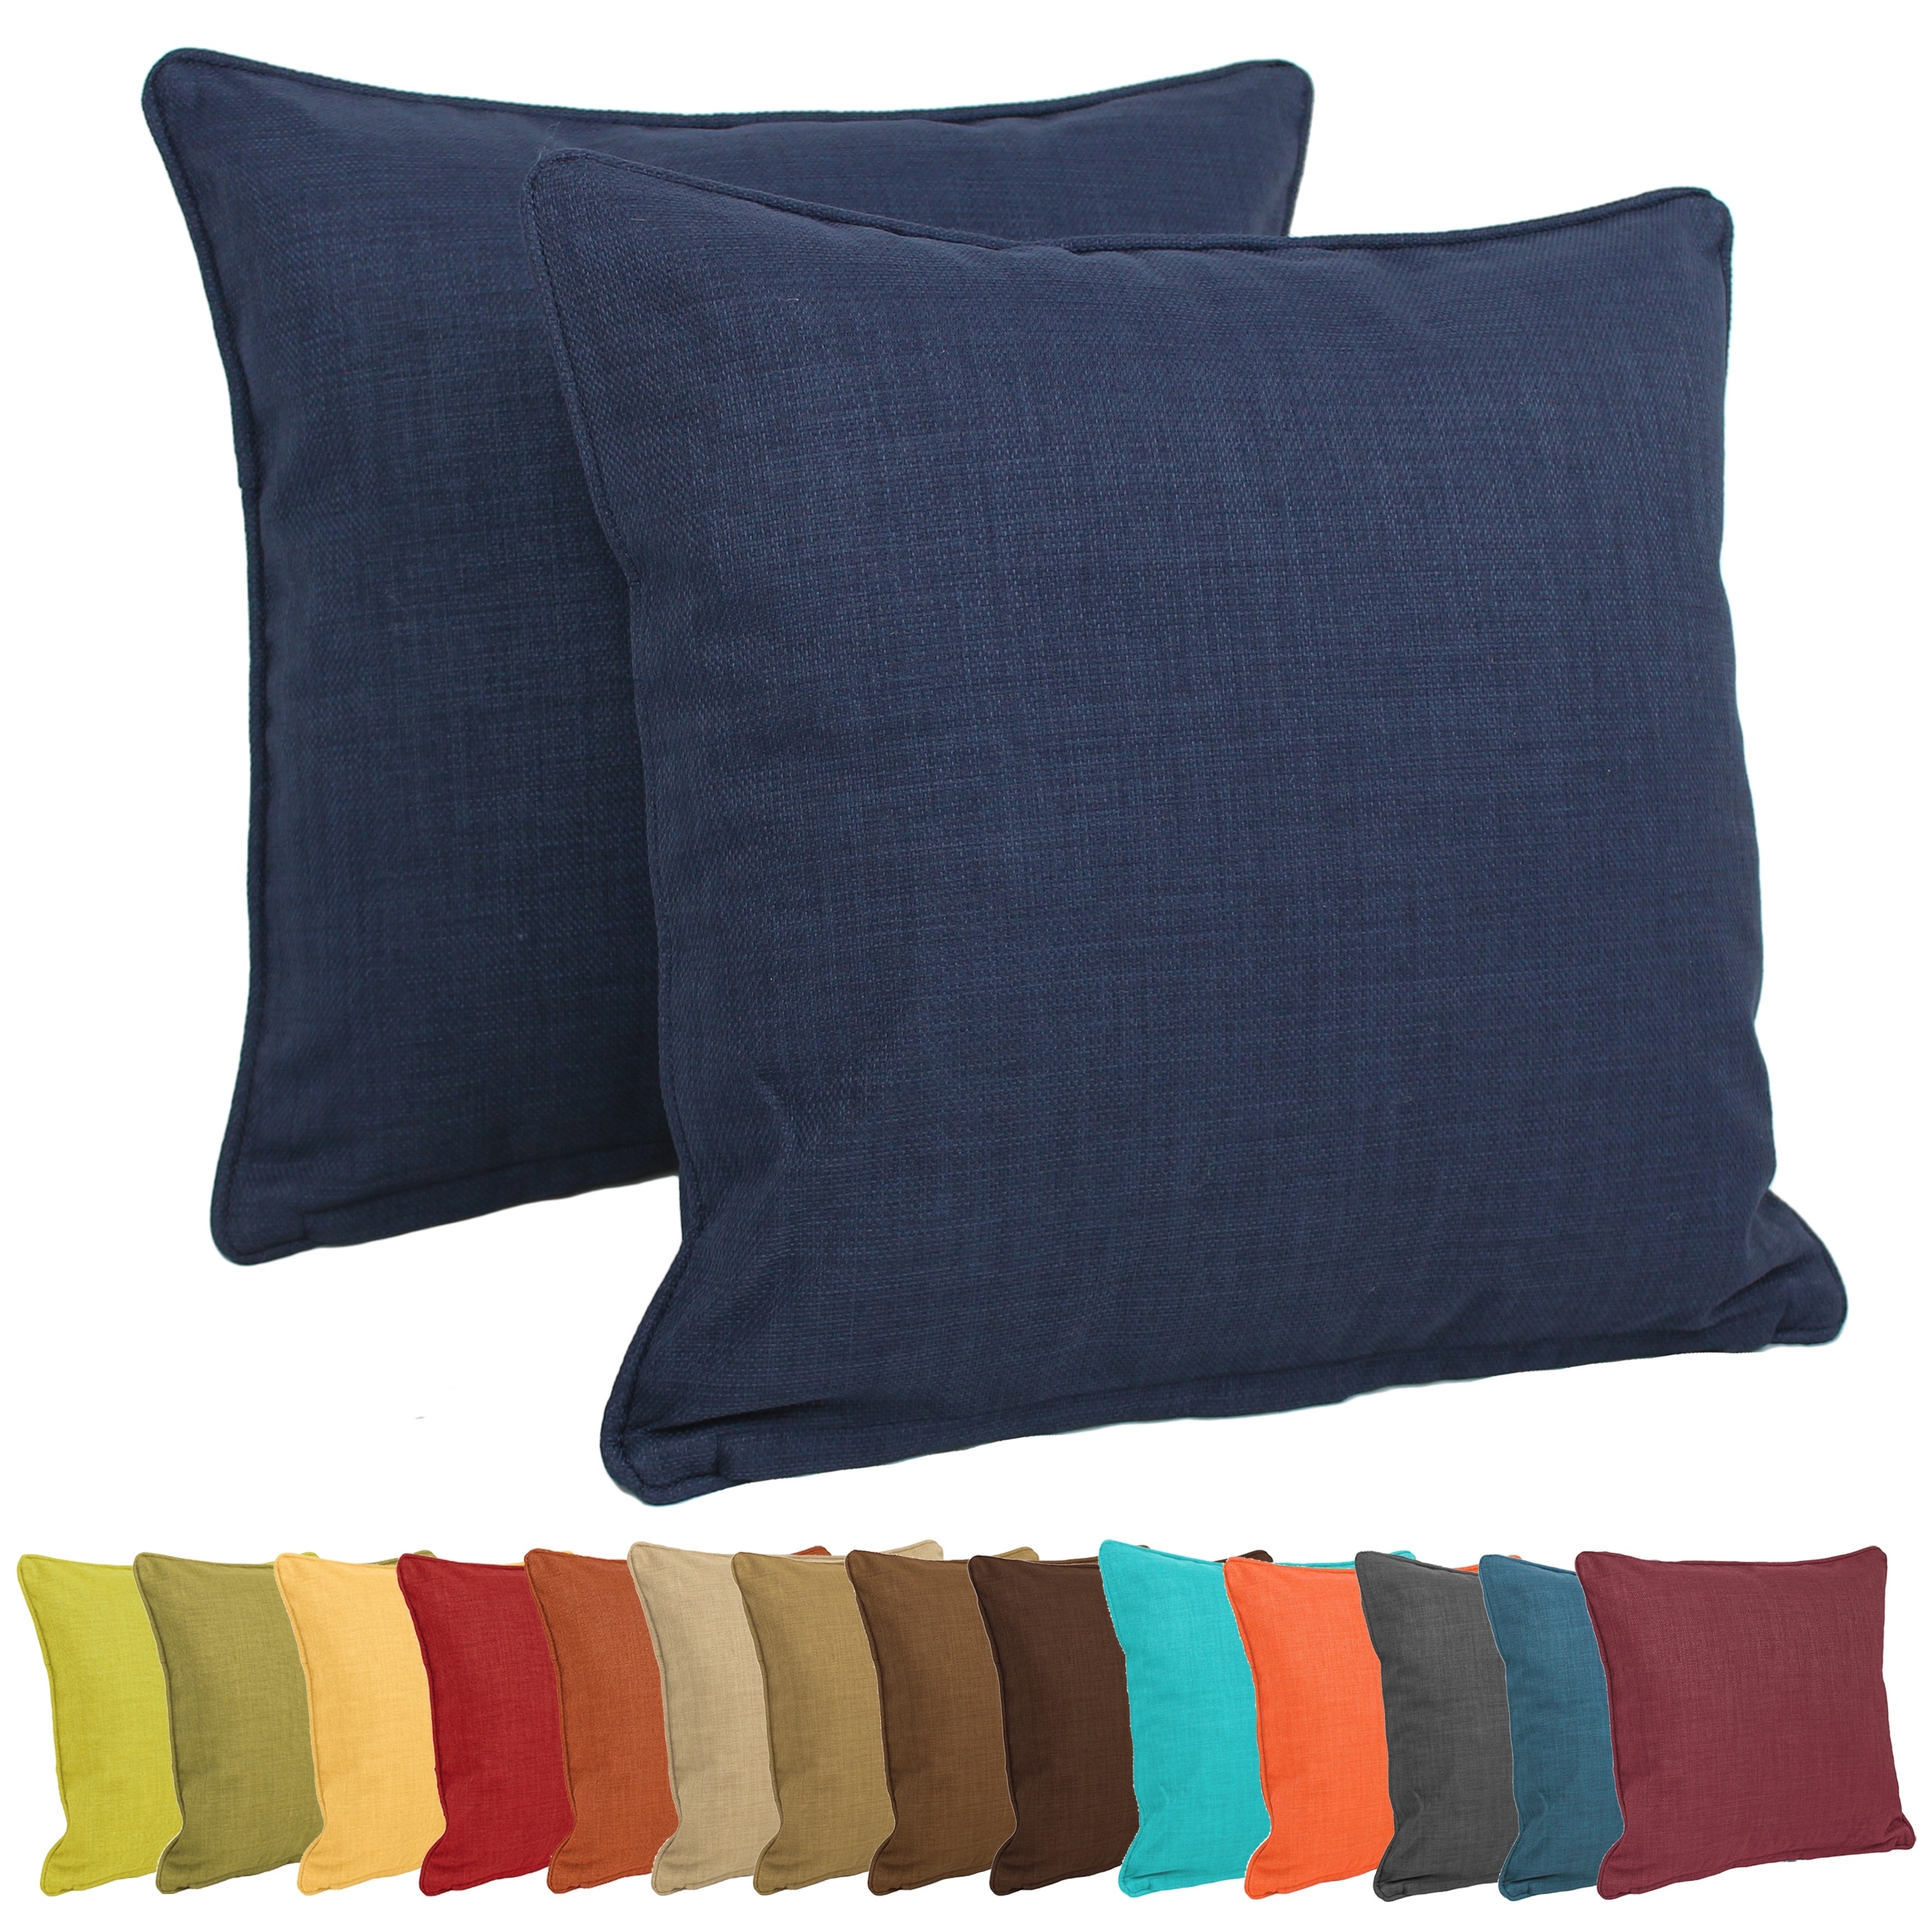 Blazing Needles 18-inch Outdoor Spun Polyester Square Throw Pillows (Set of 2) - Aqua Blue